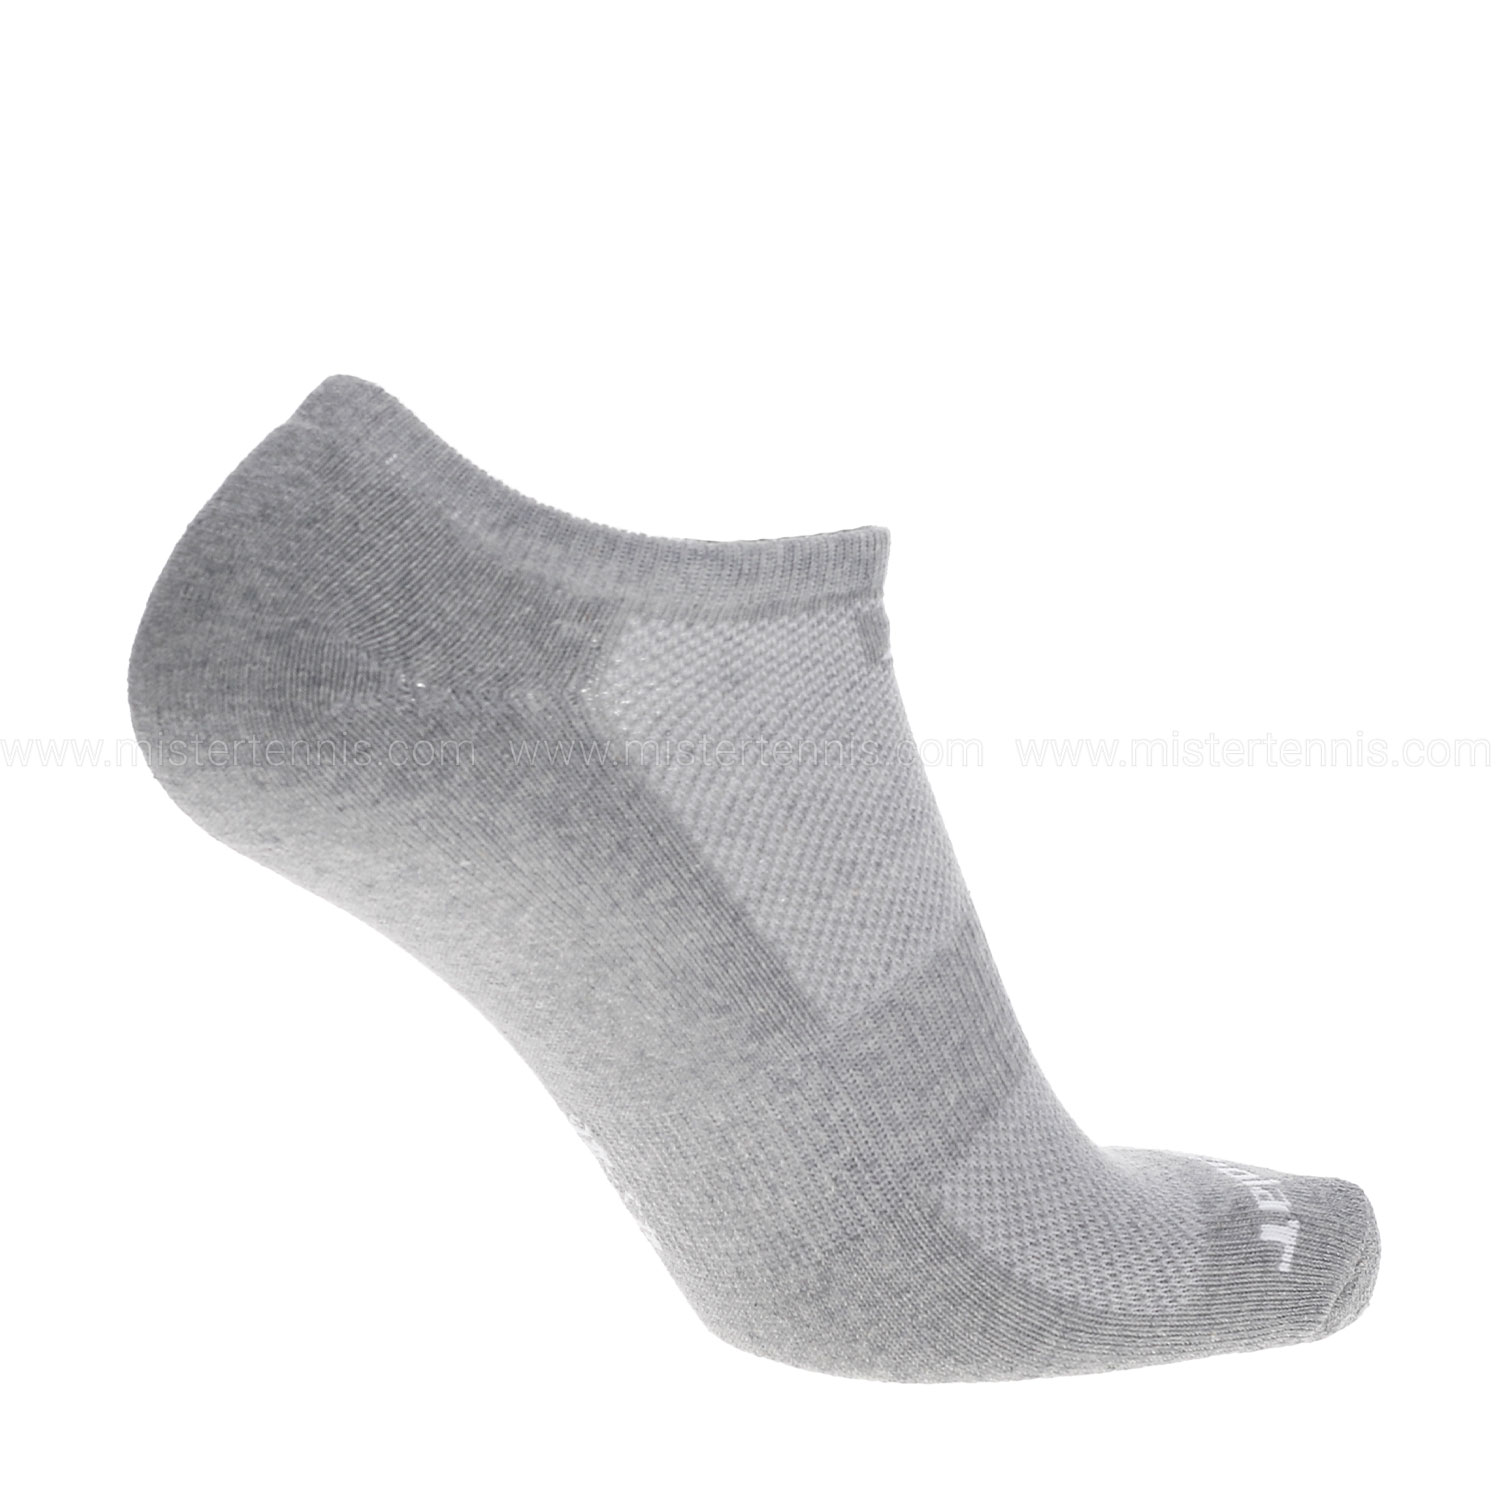 Babolat Match x 3 Socks - White/Estate Blue/Grey